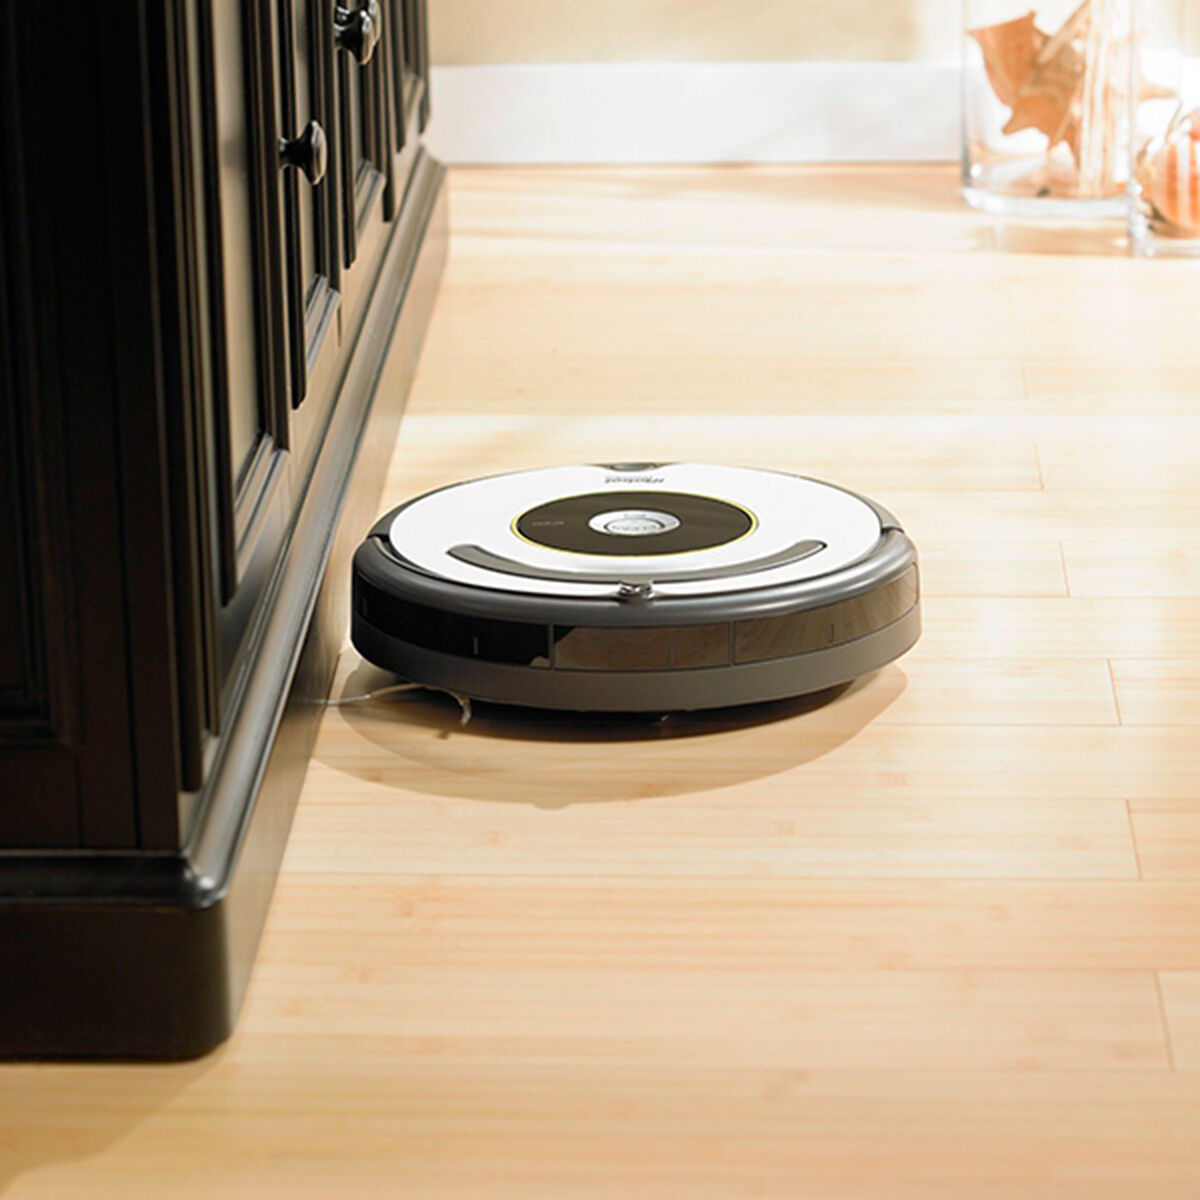 Aspiradora Robot iRobot Roomba 621